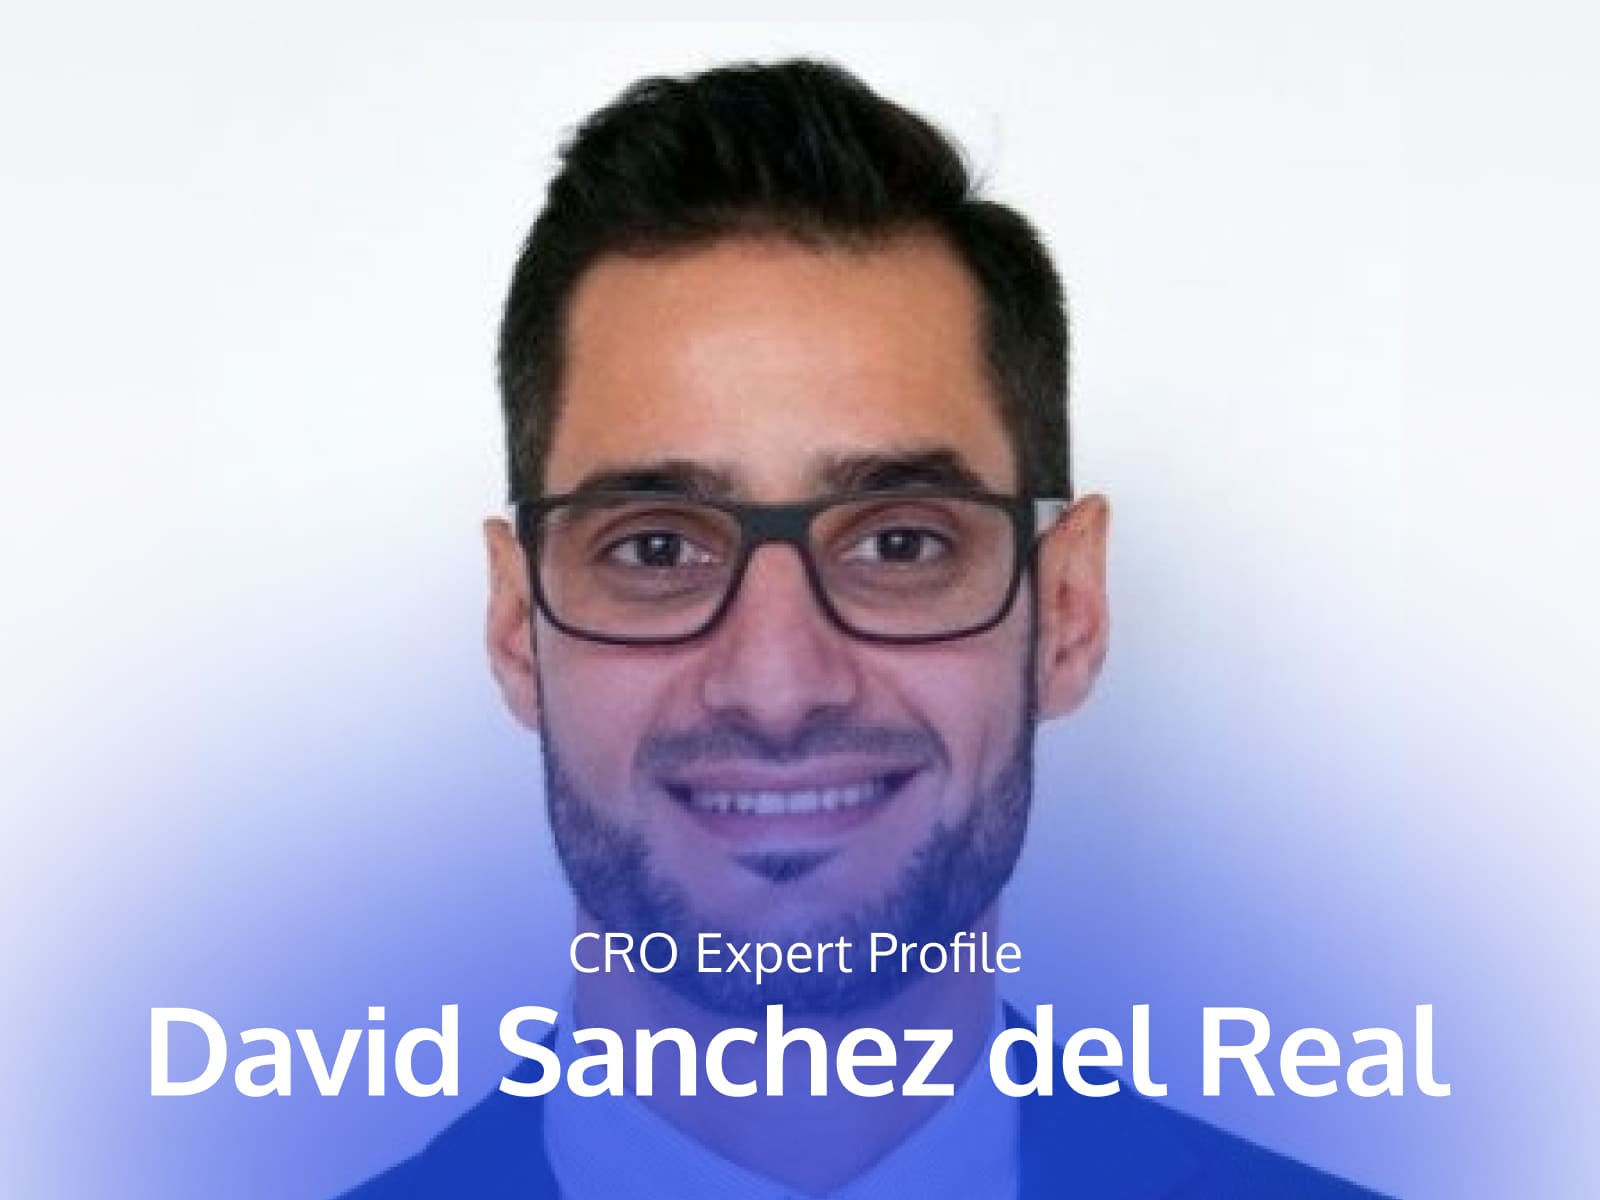 Interview with David Sanchez del Real